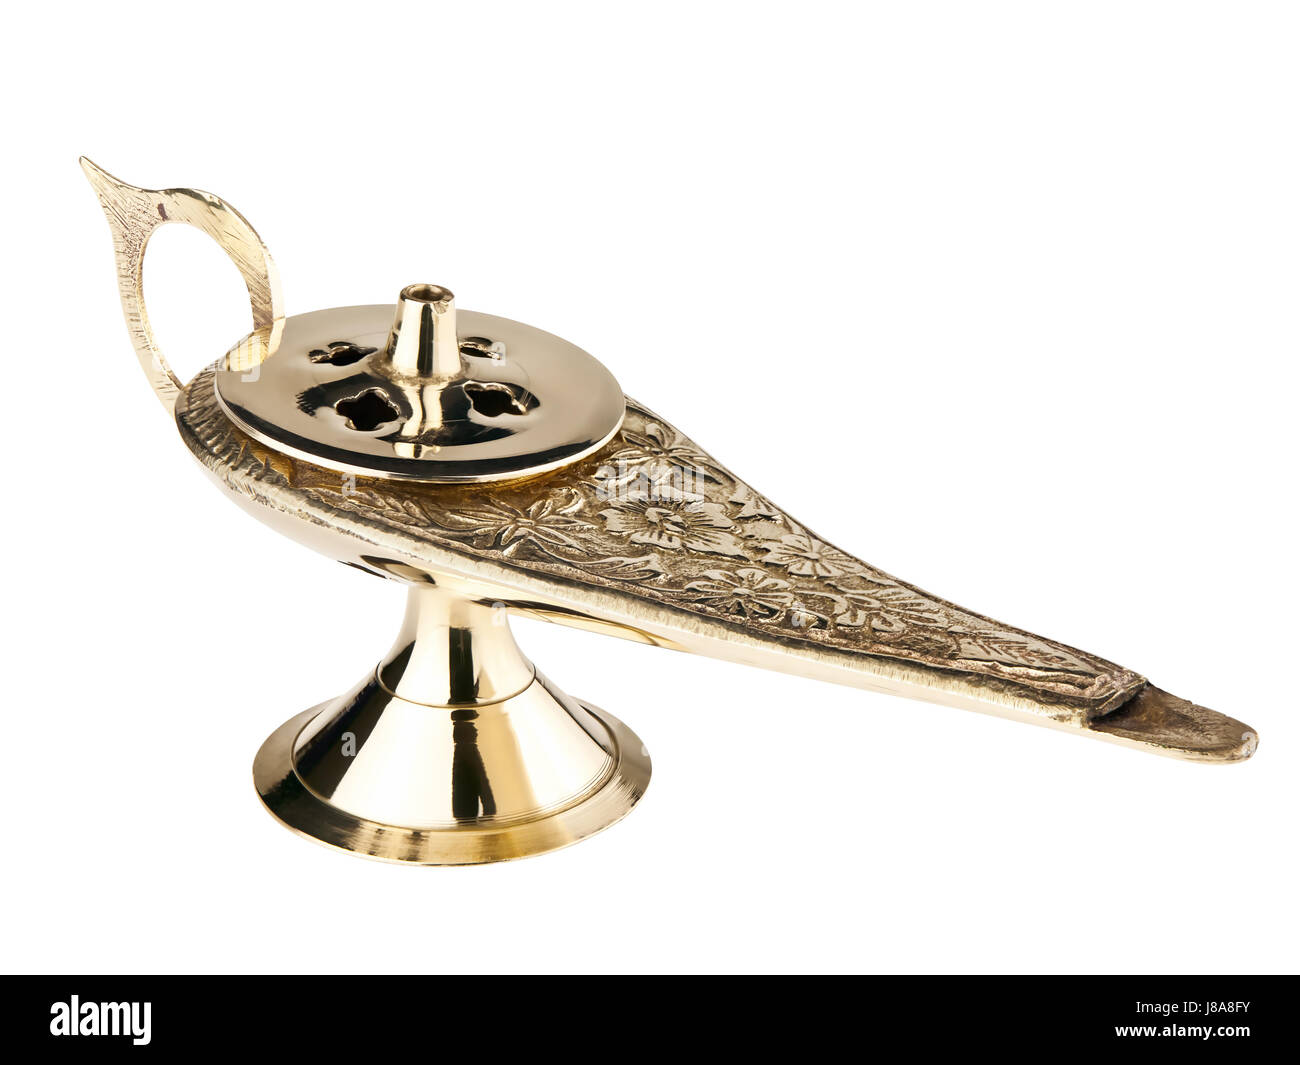 object, antique, dream, golden, metal, adventure, brass, traditional, lantern, Stock Photo